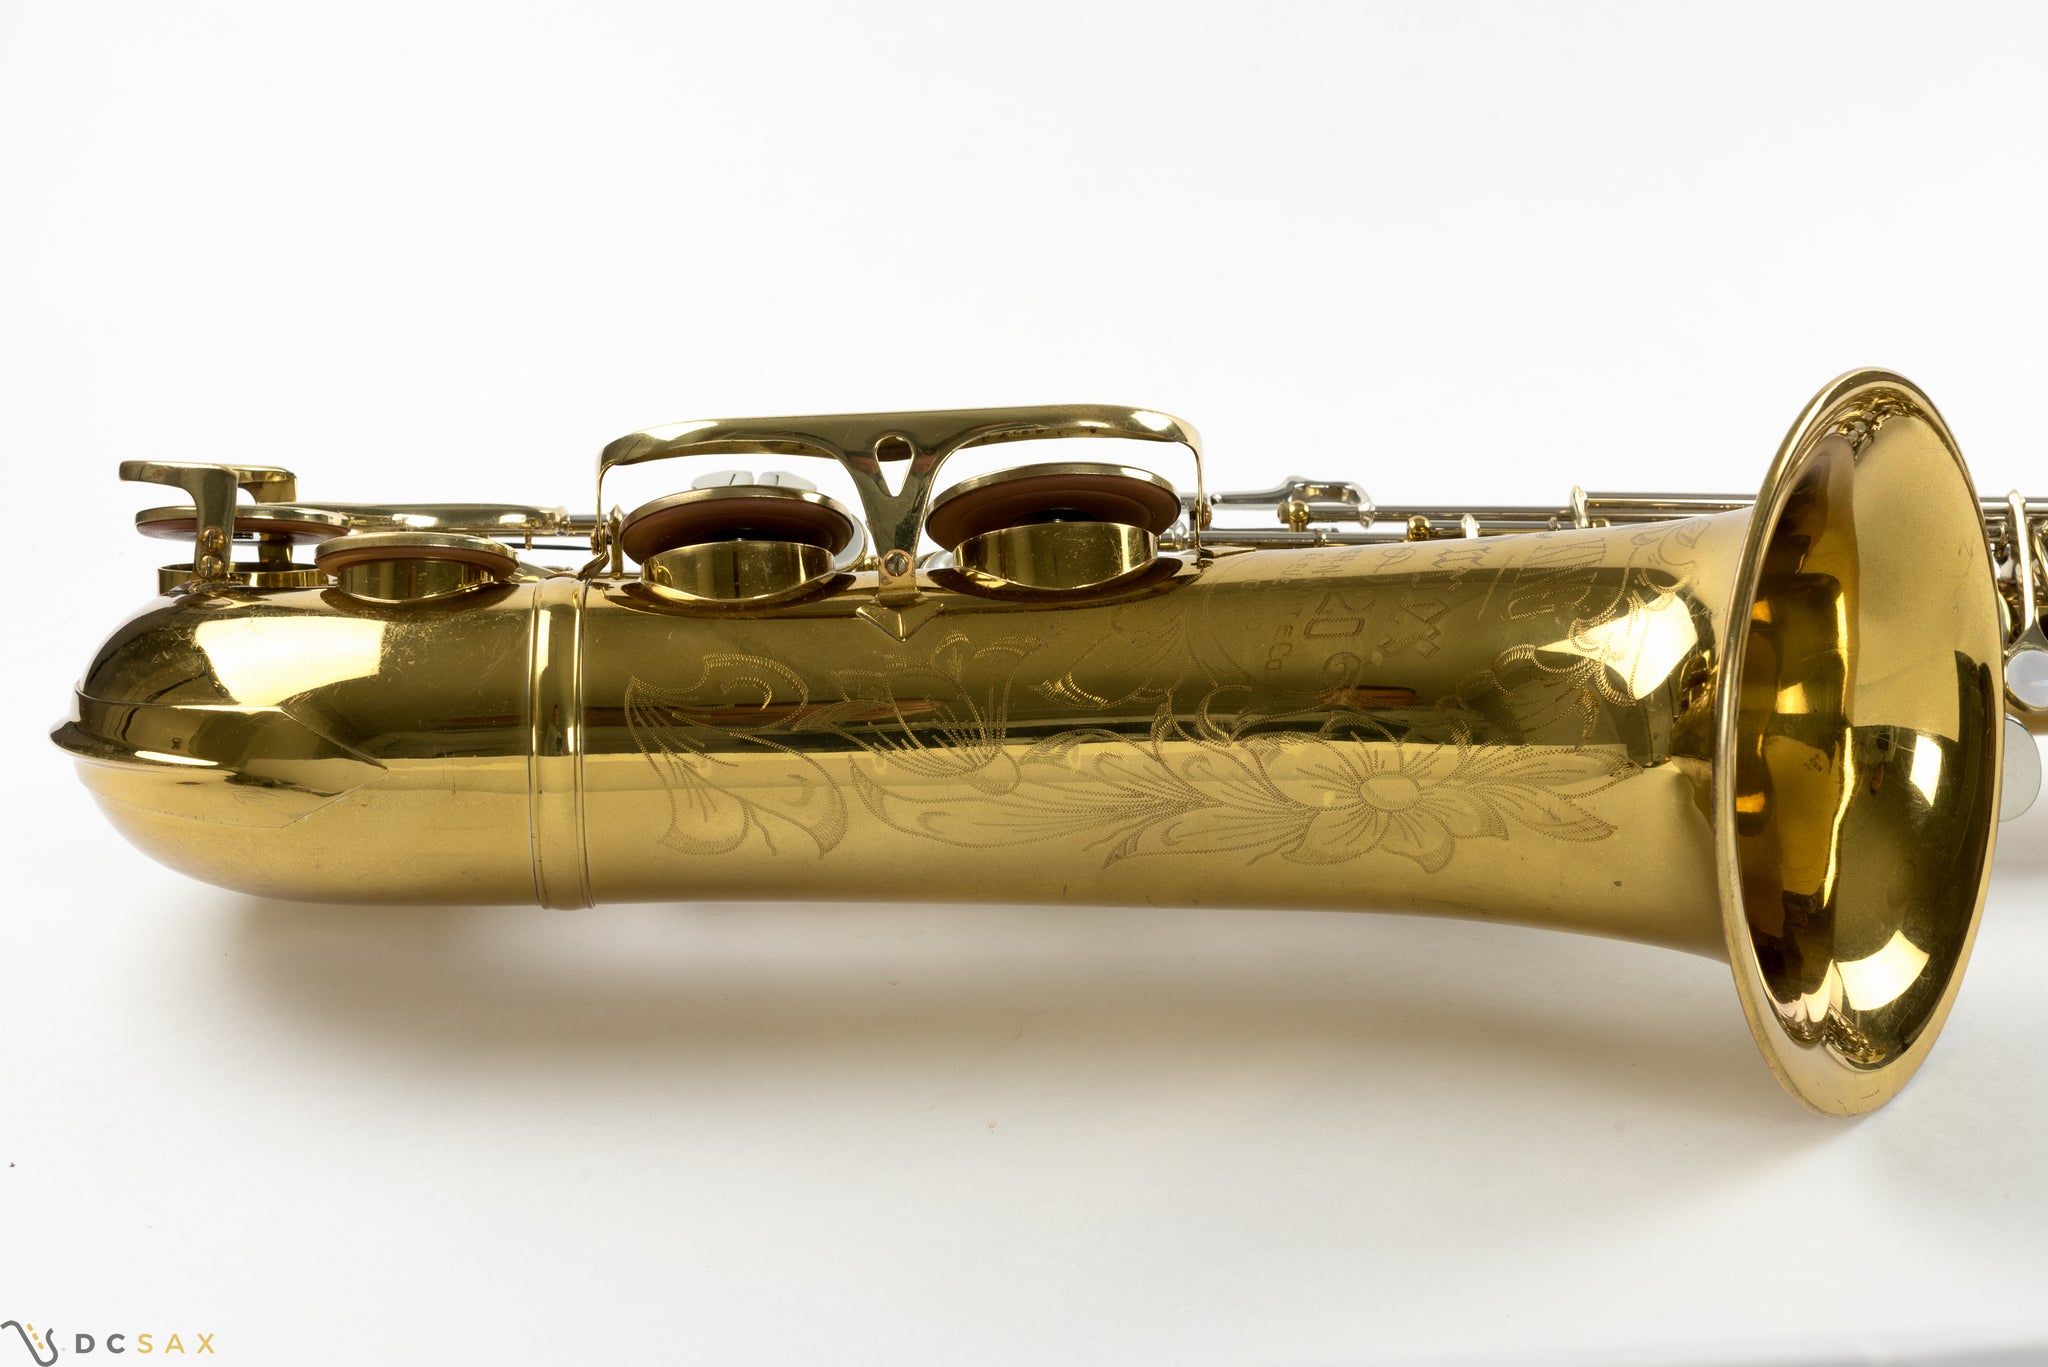 King Super 20 Tenor Saxophone, 99%+ Original Lacquer, Cleveland Era, Video